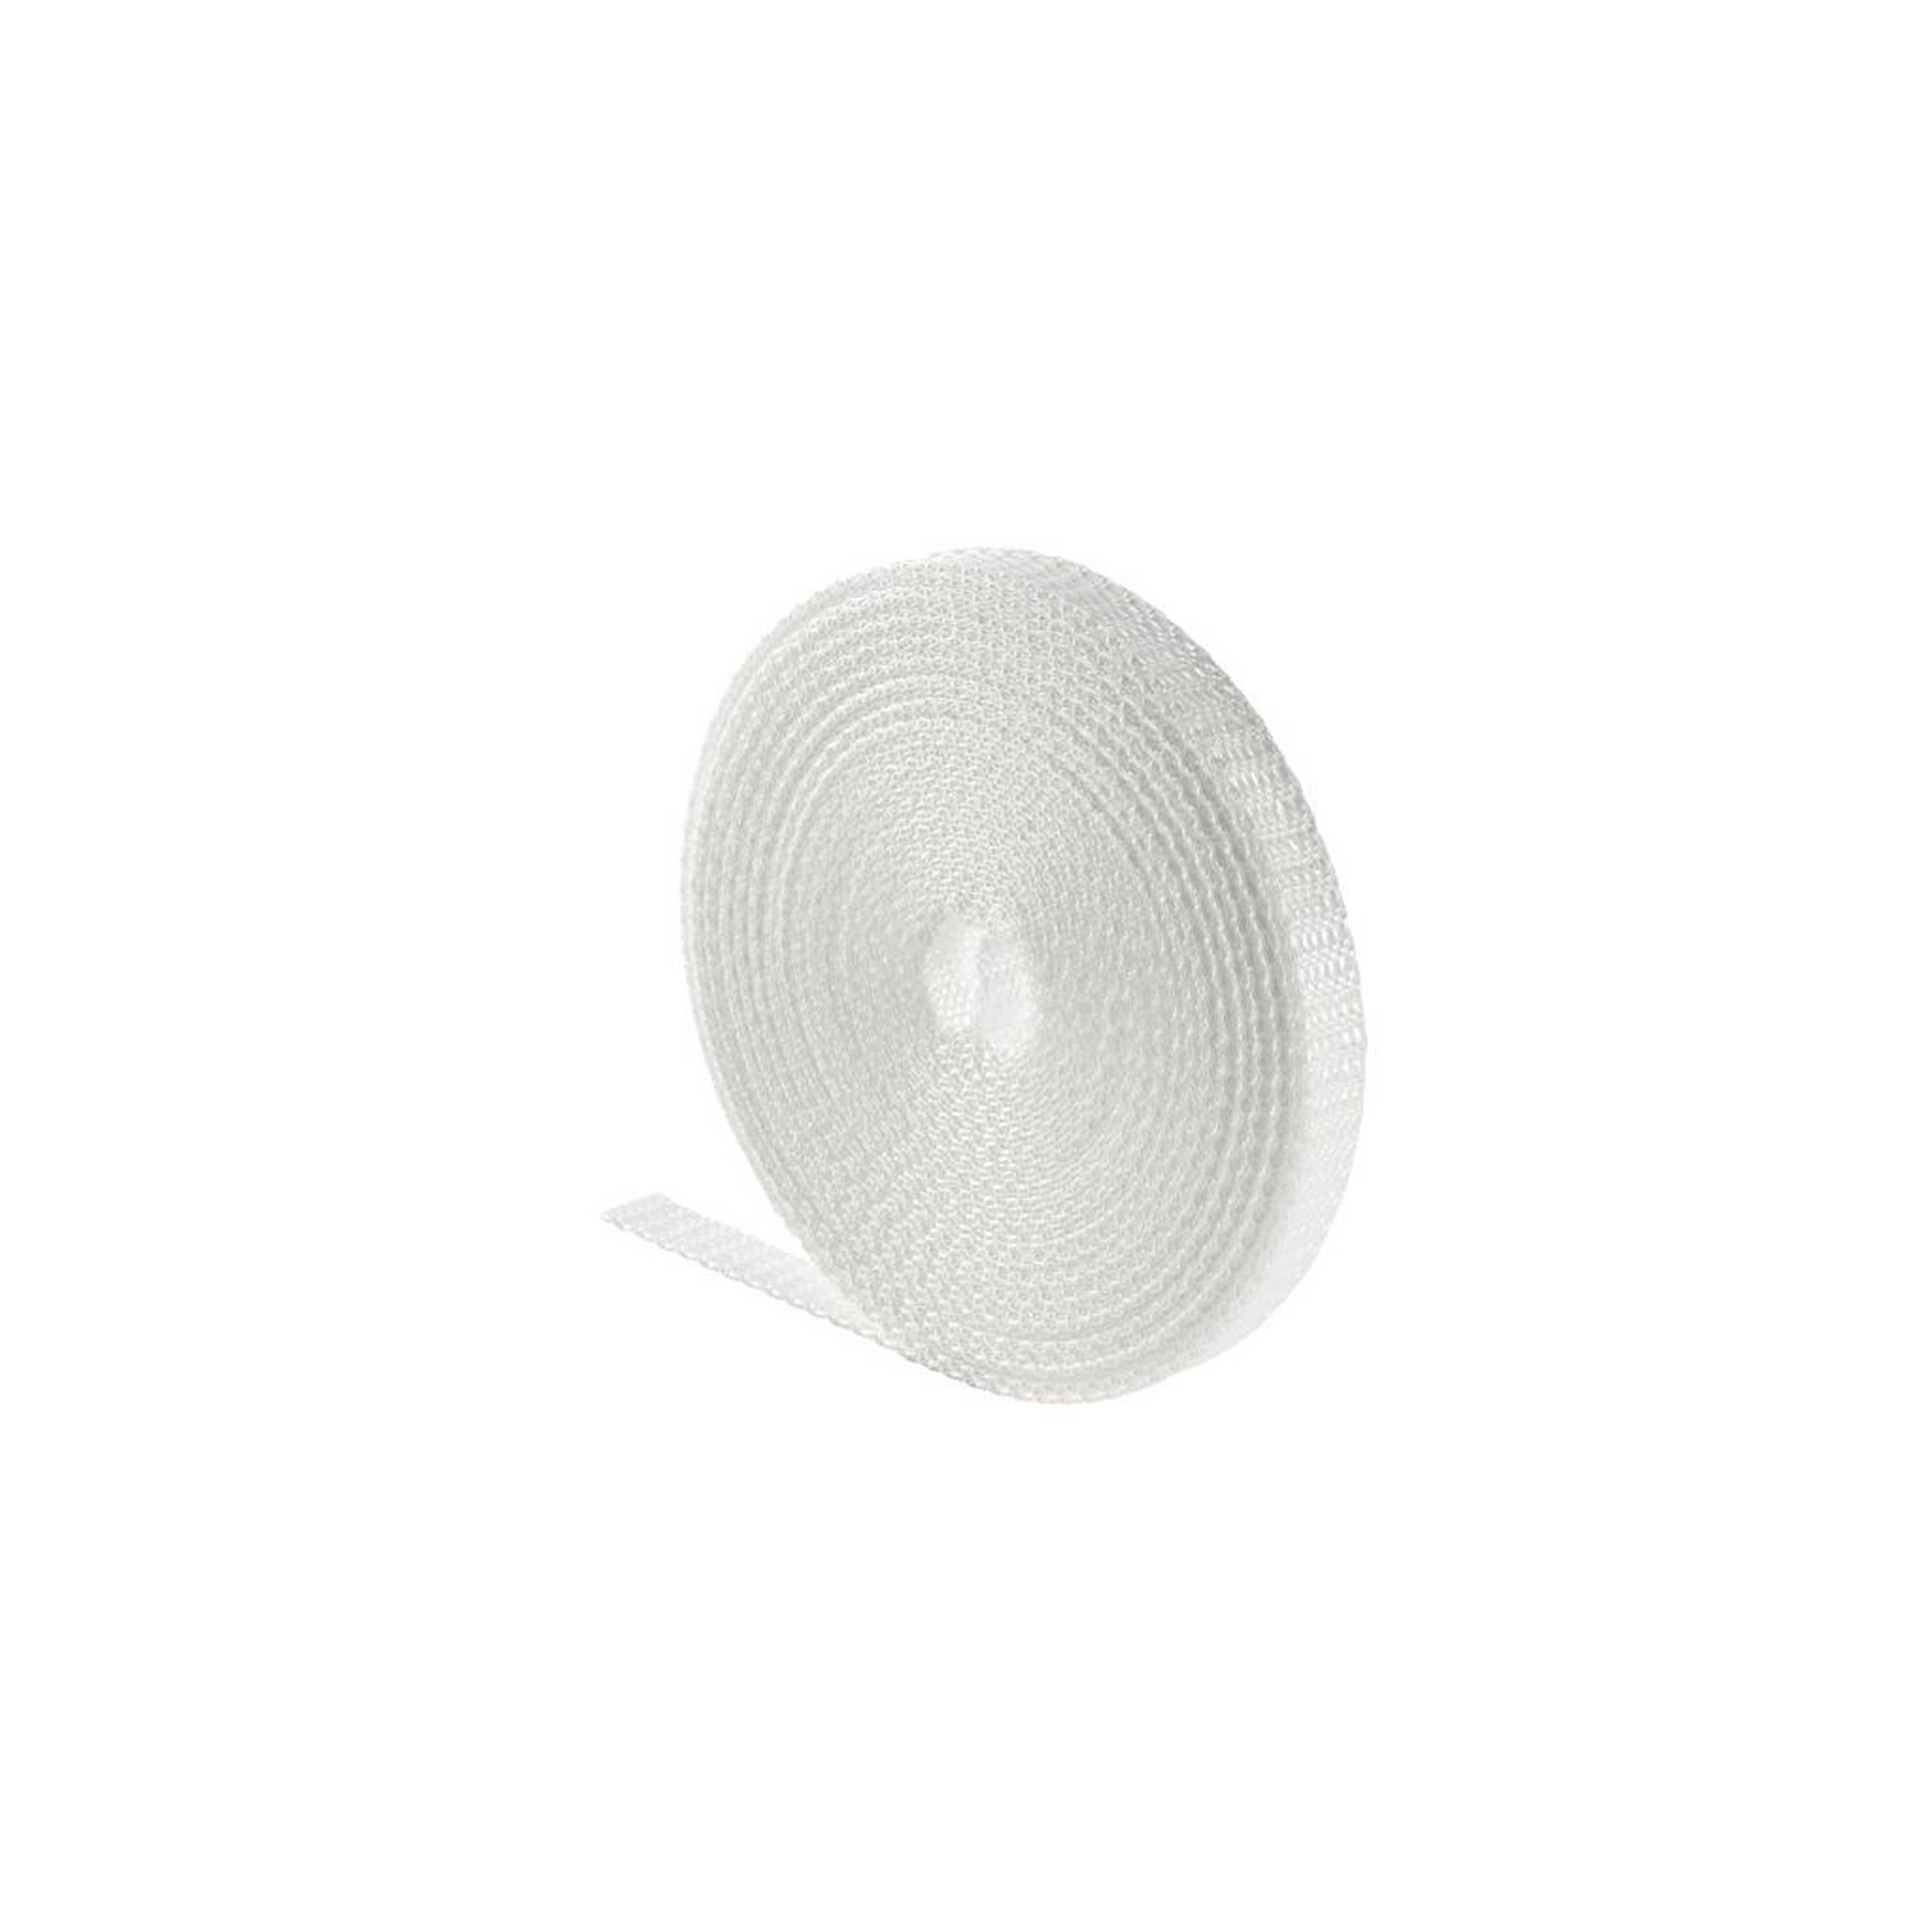 Rollladengurt 'Mini' weiß, Länge 12 m + product picture